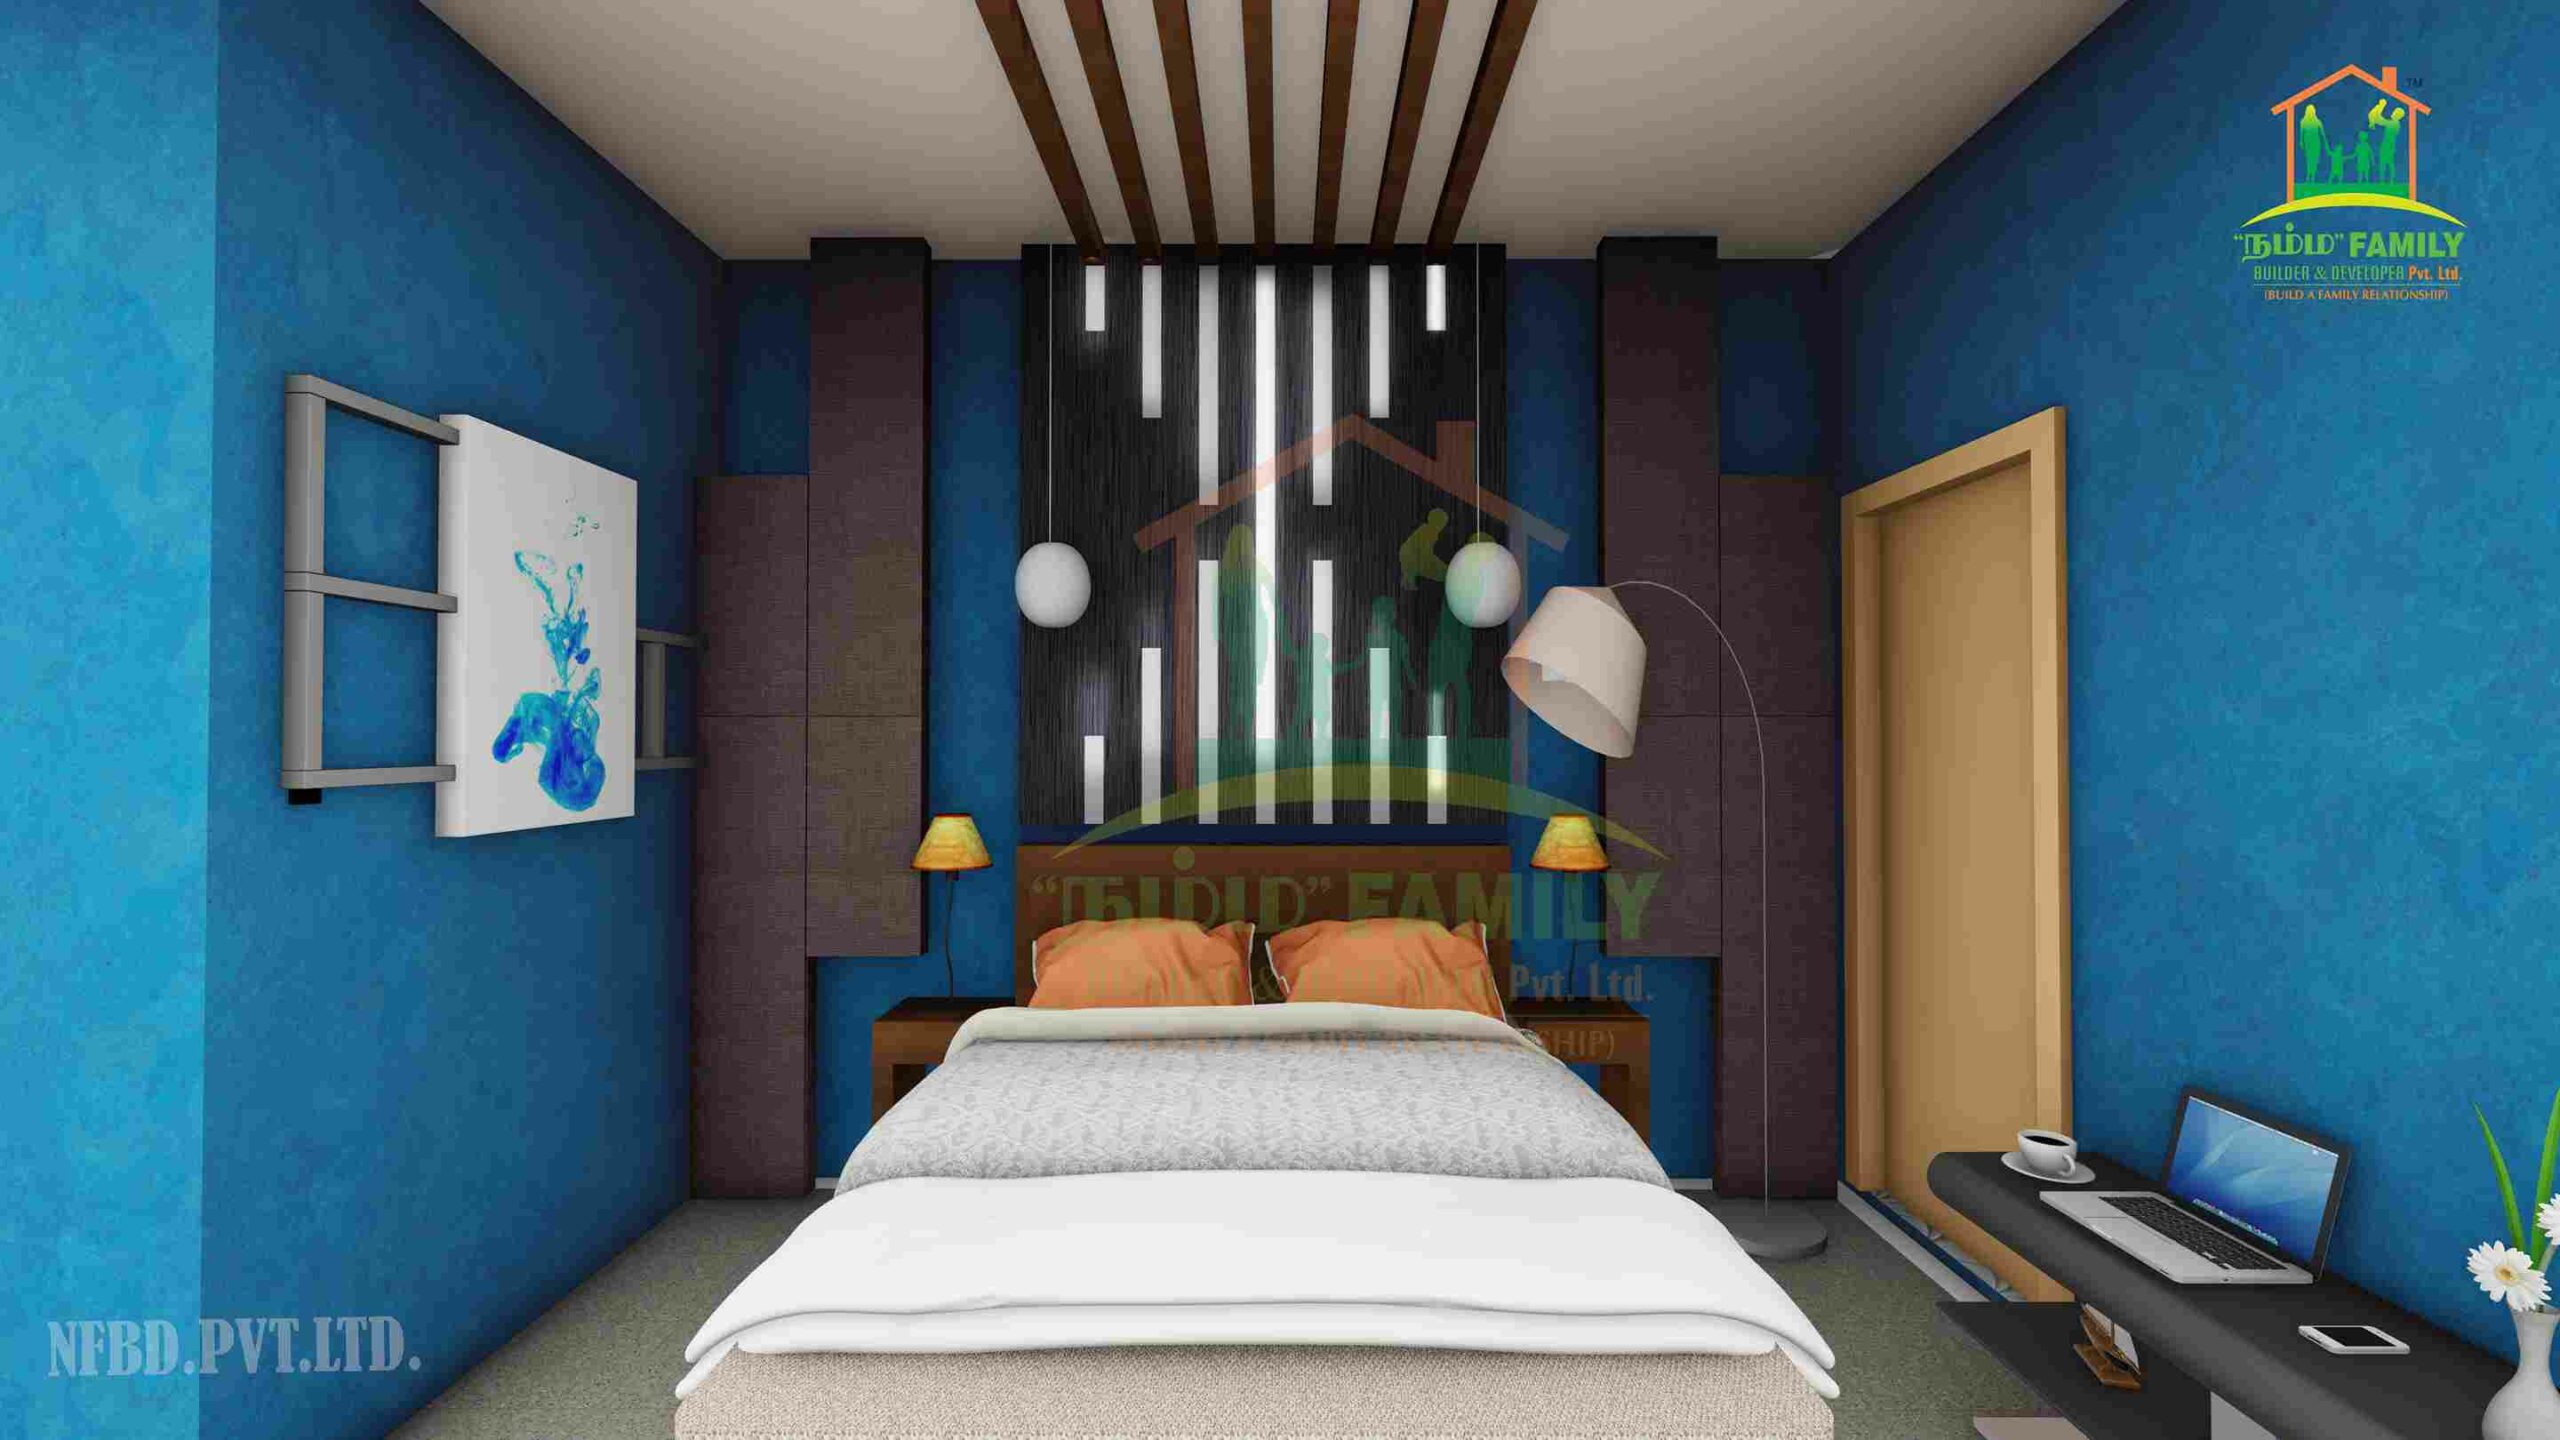 Top-to-Bottom Bedroom Ceiling Design